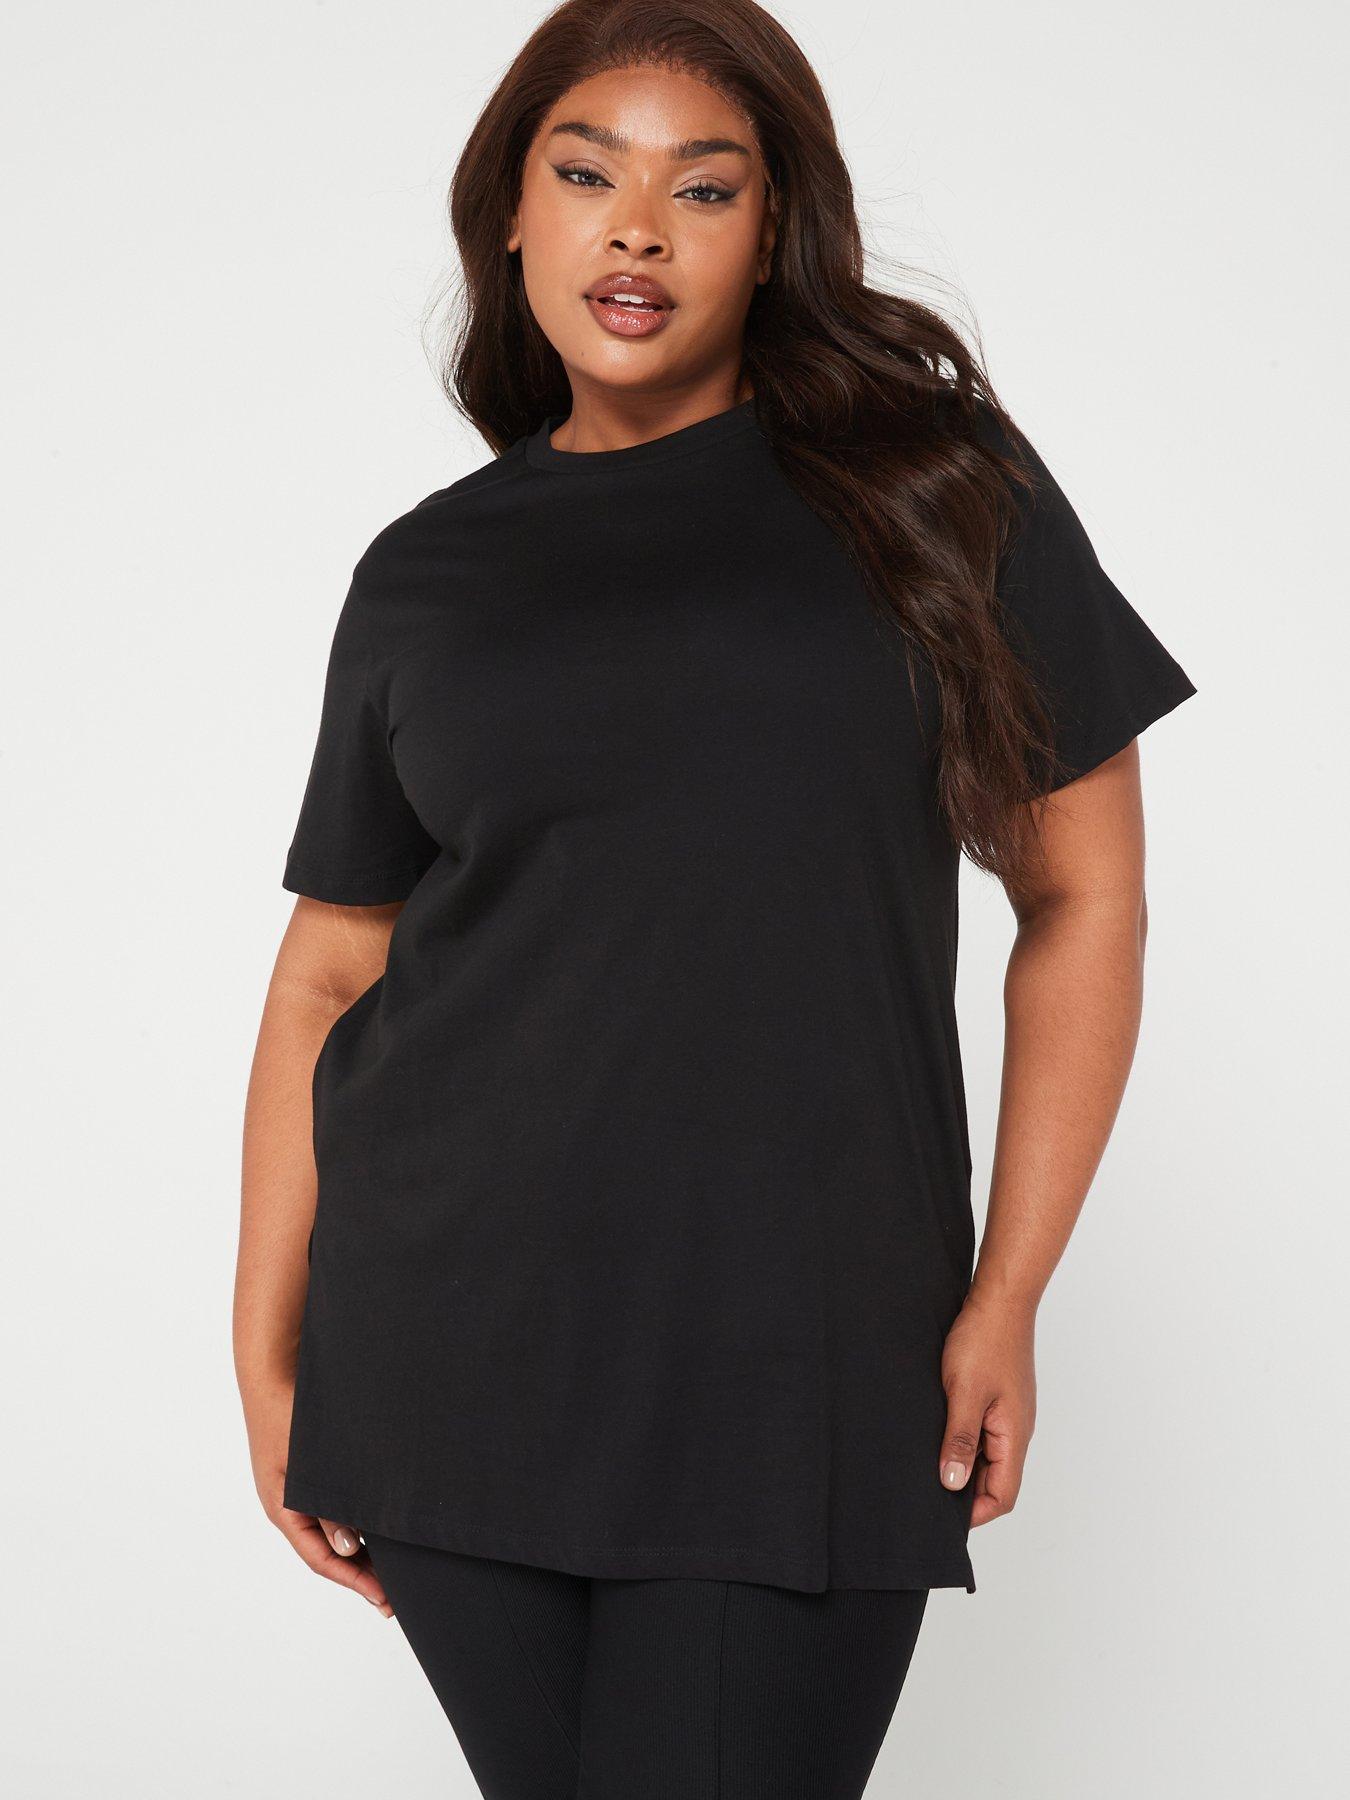 plain black t shirt plus size